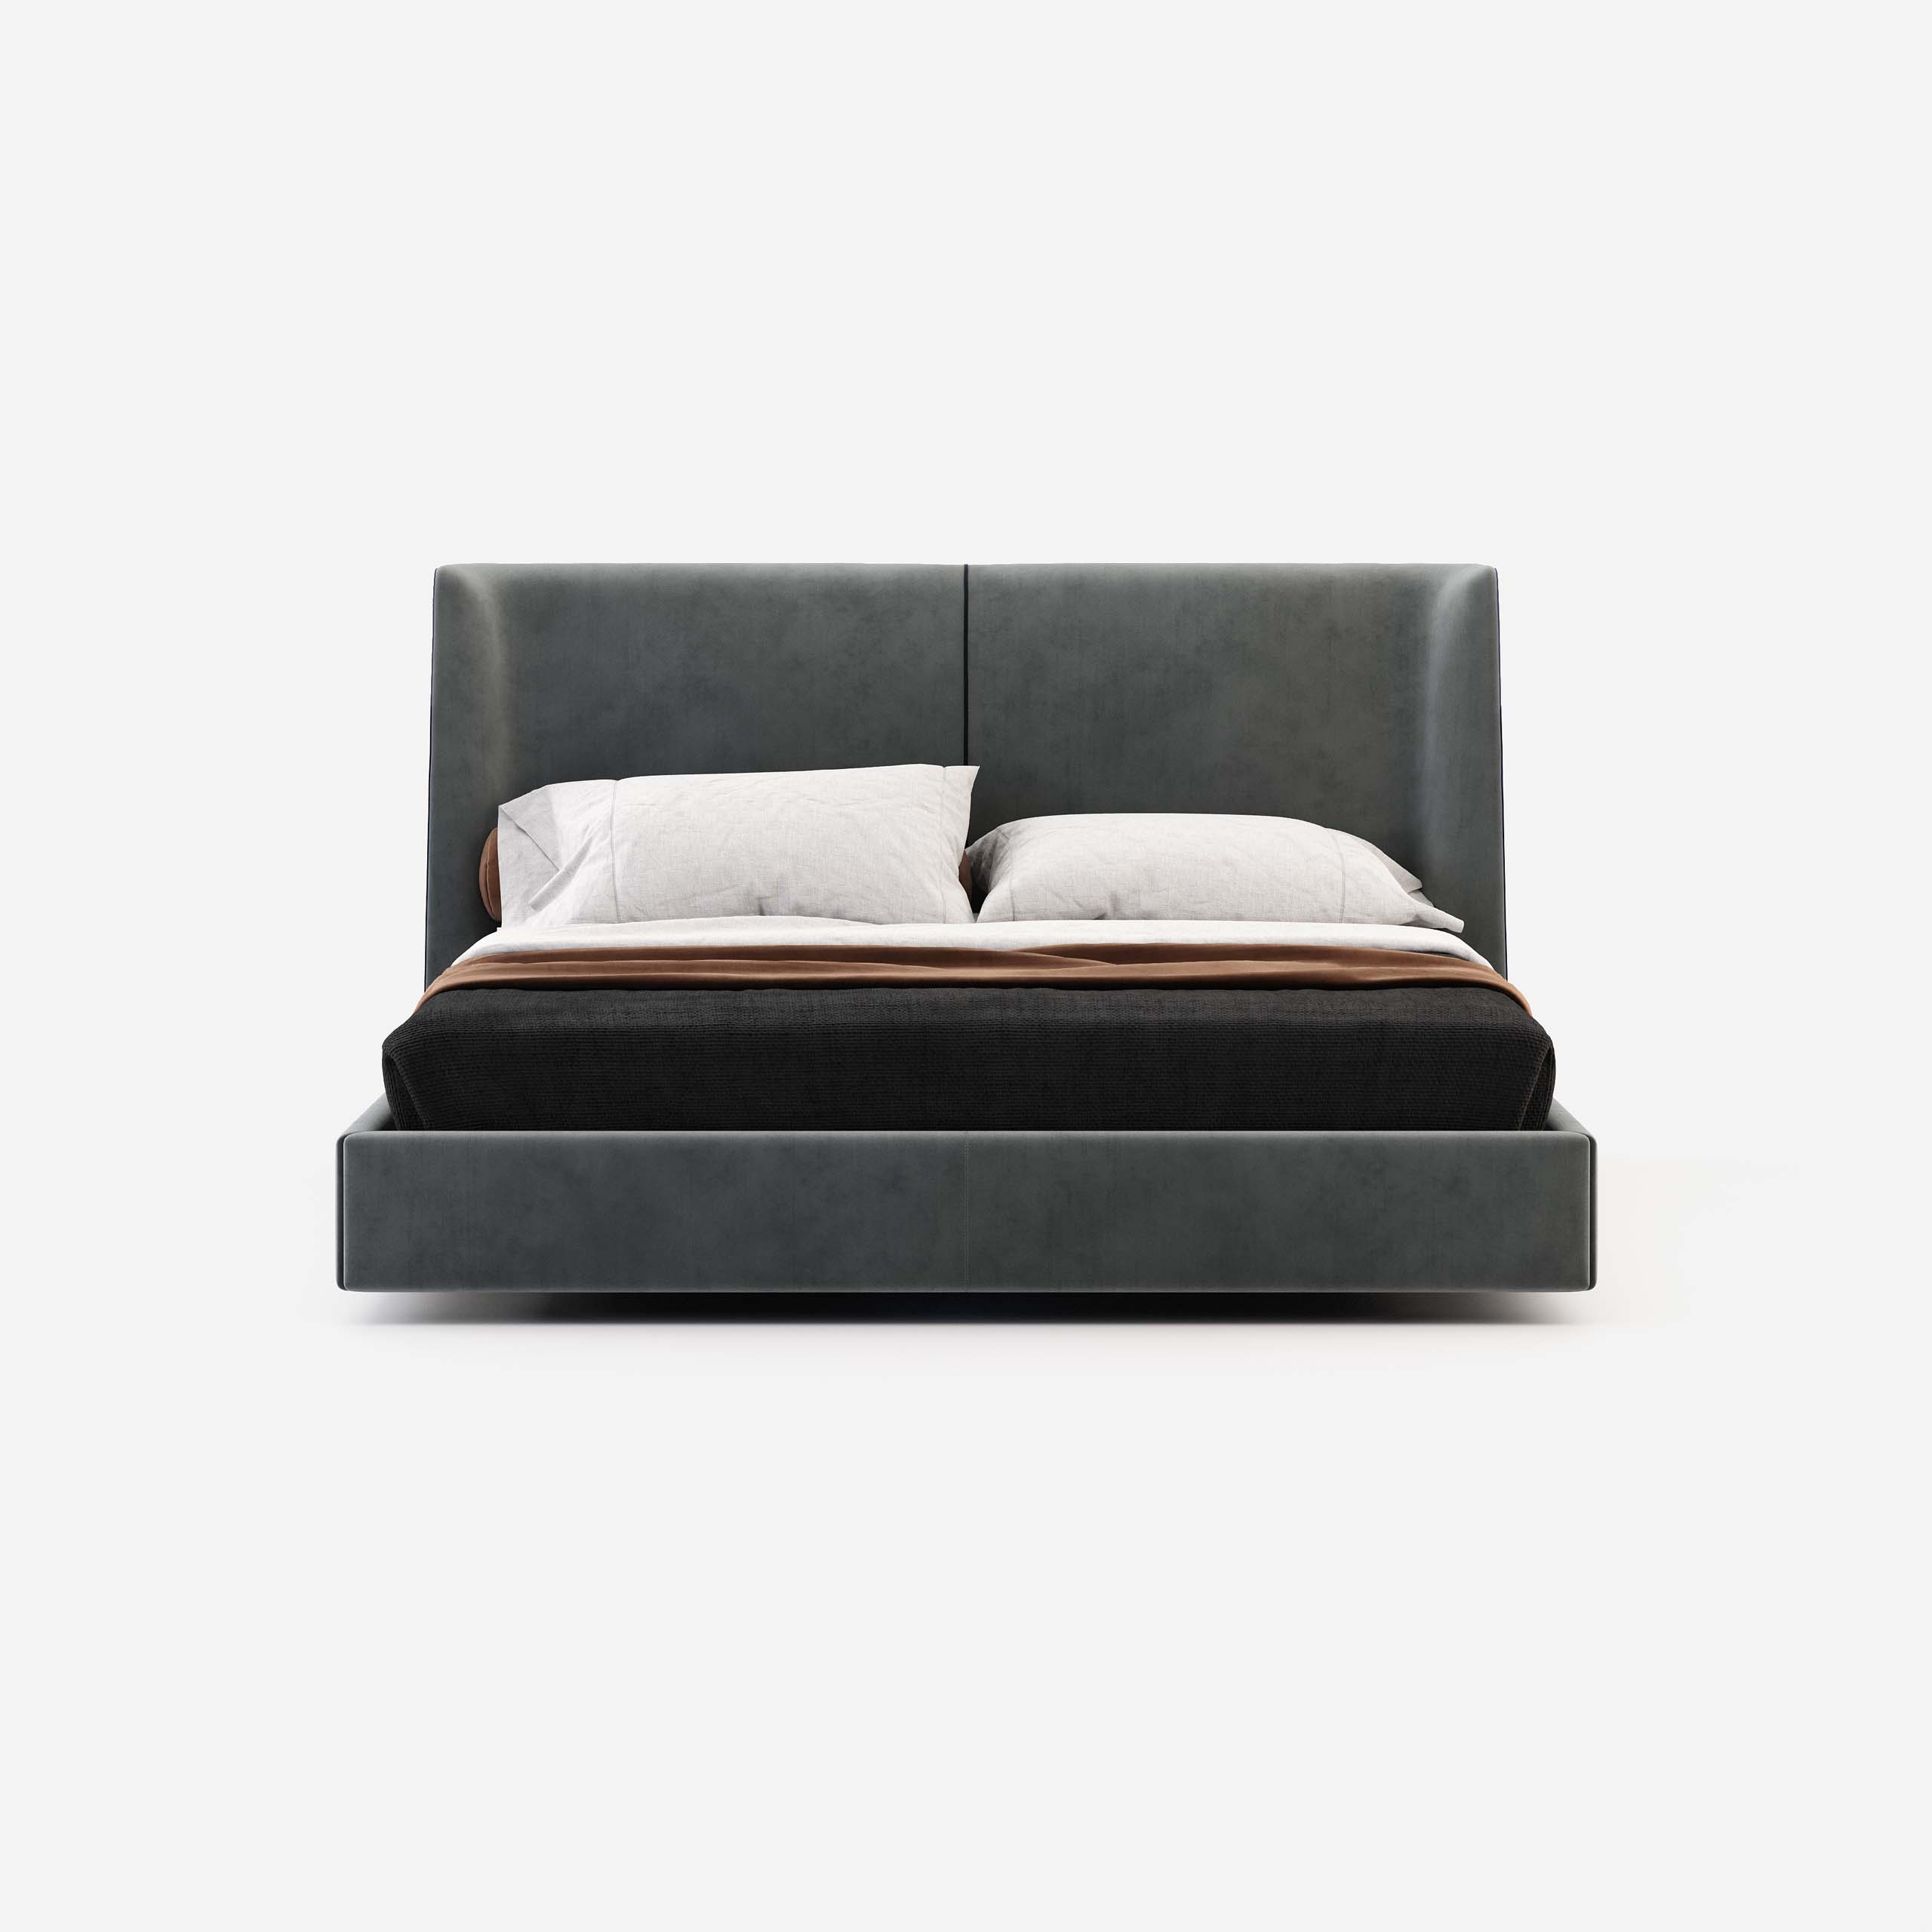 echo bed-domkapa-new-collection-2021-bedroom